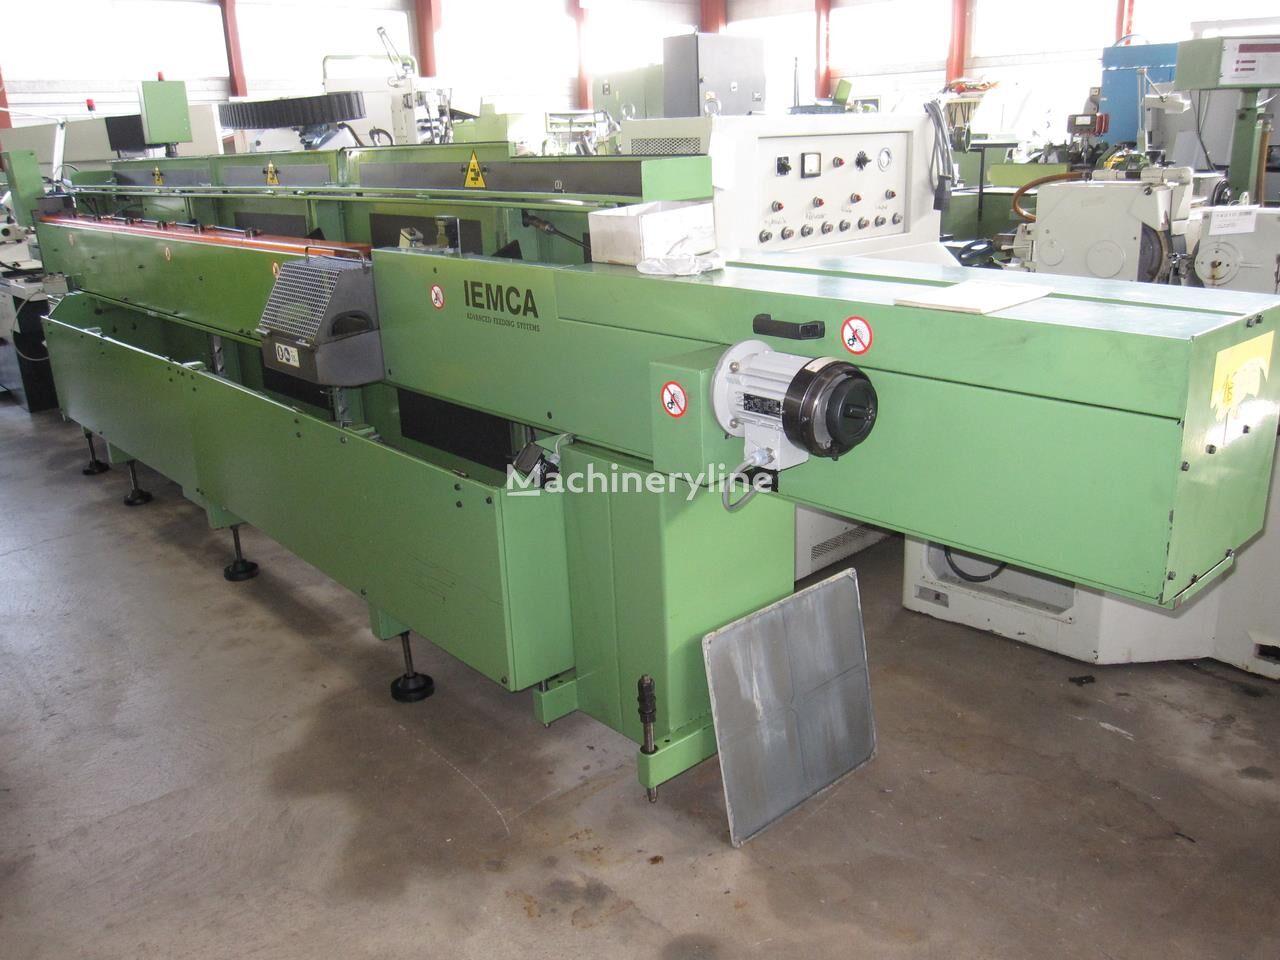 Iemca TS 560/37 P other metalworking machinery